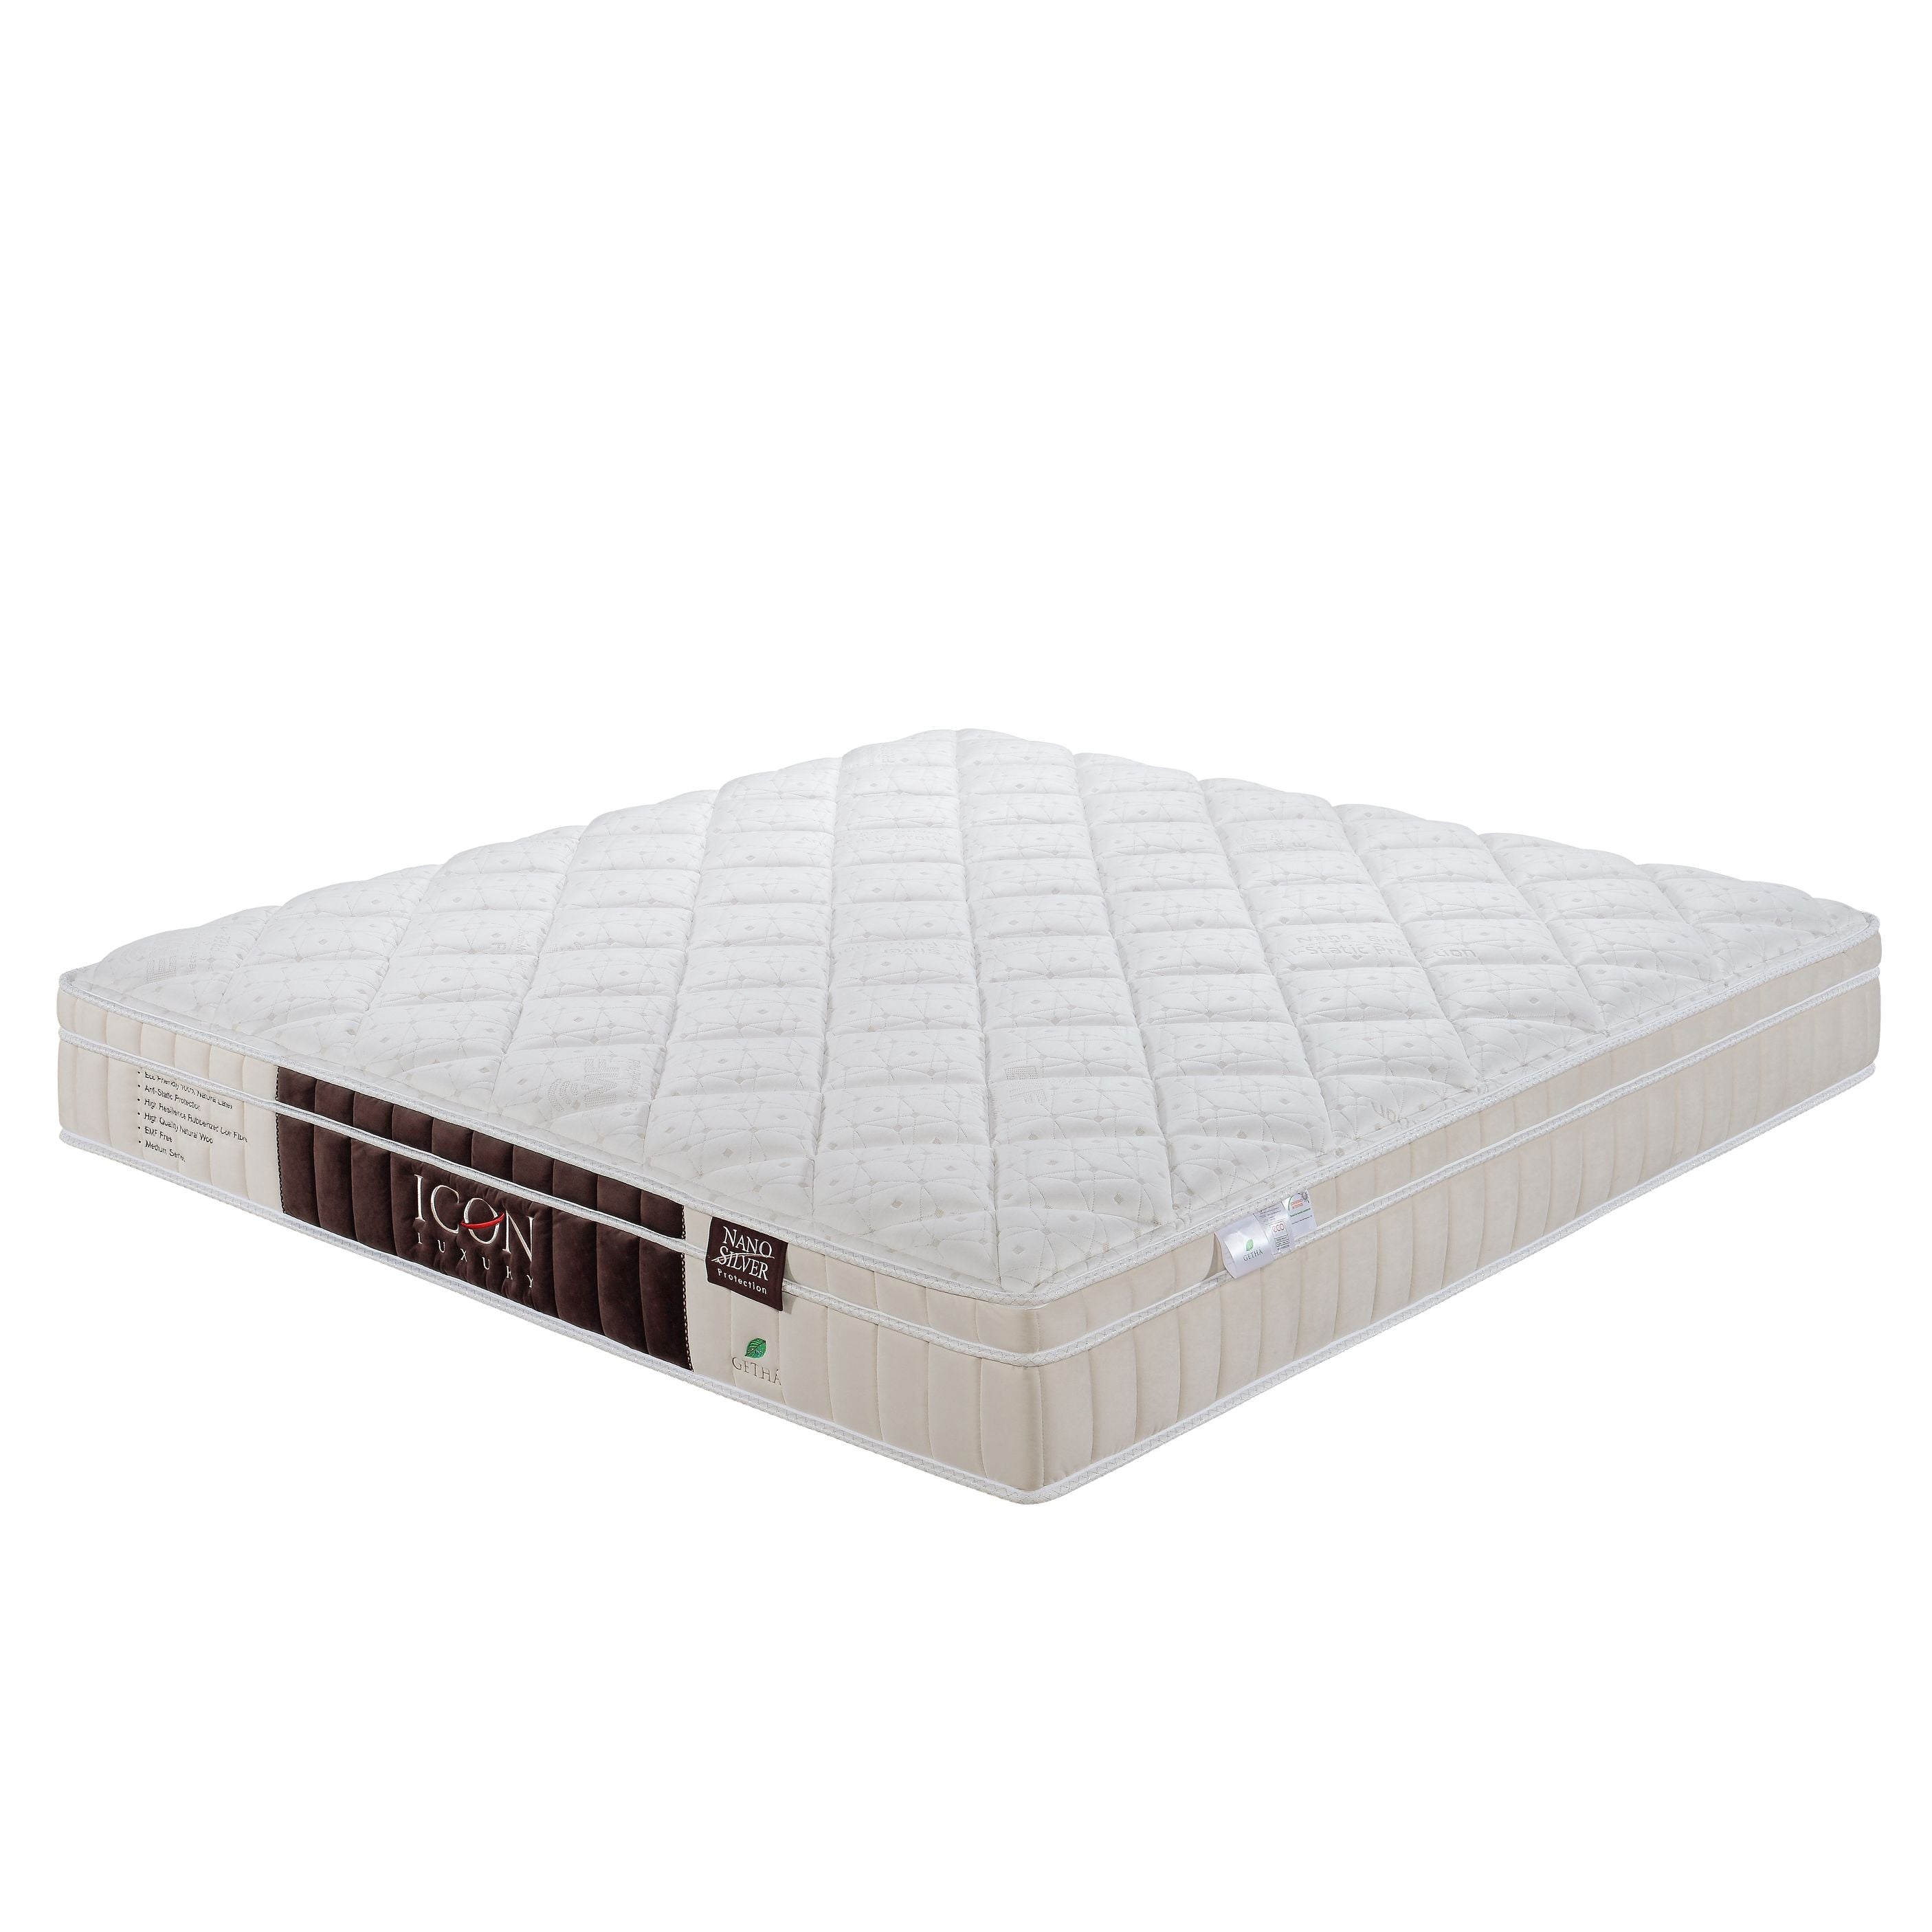 ICON Luxury Sleeping Latex Mattress